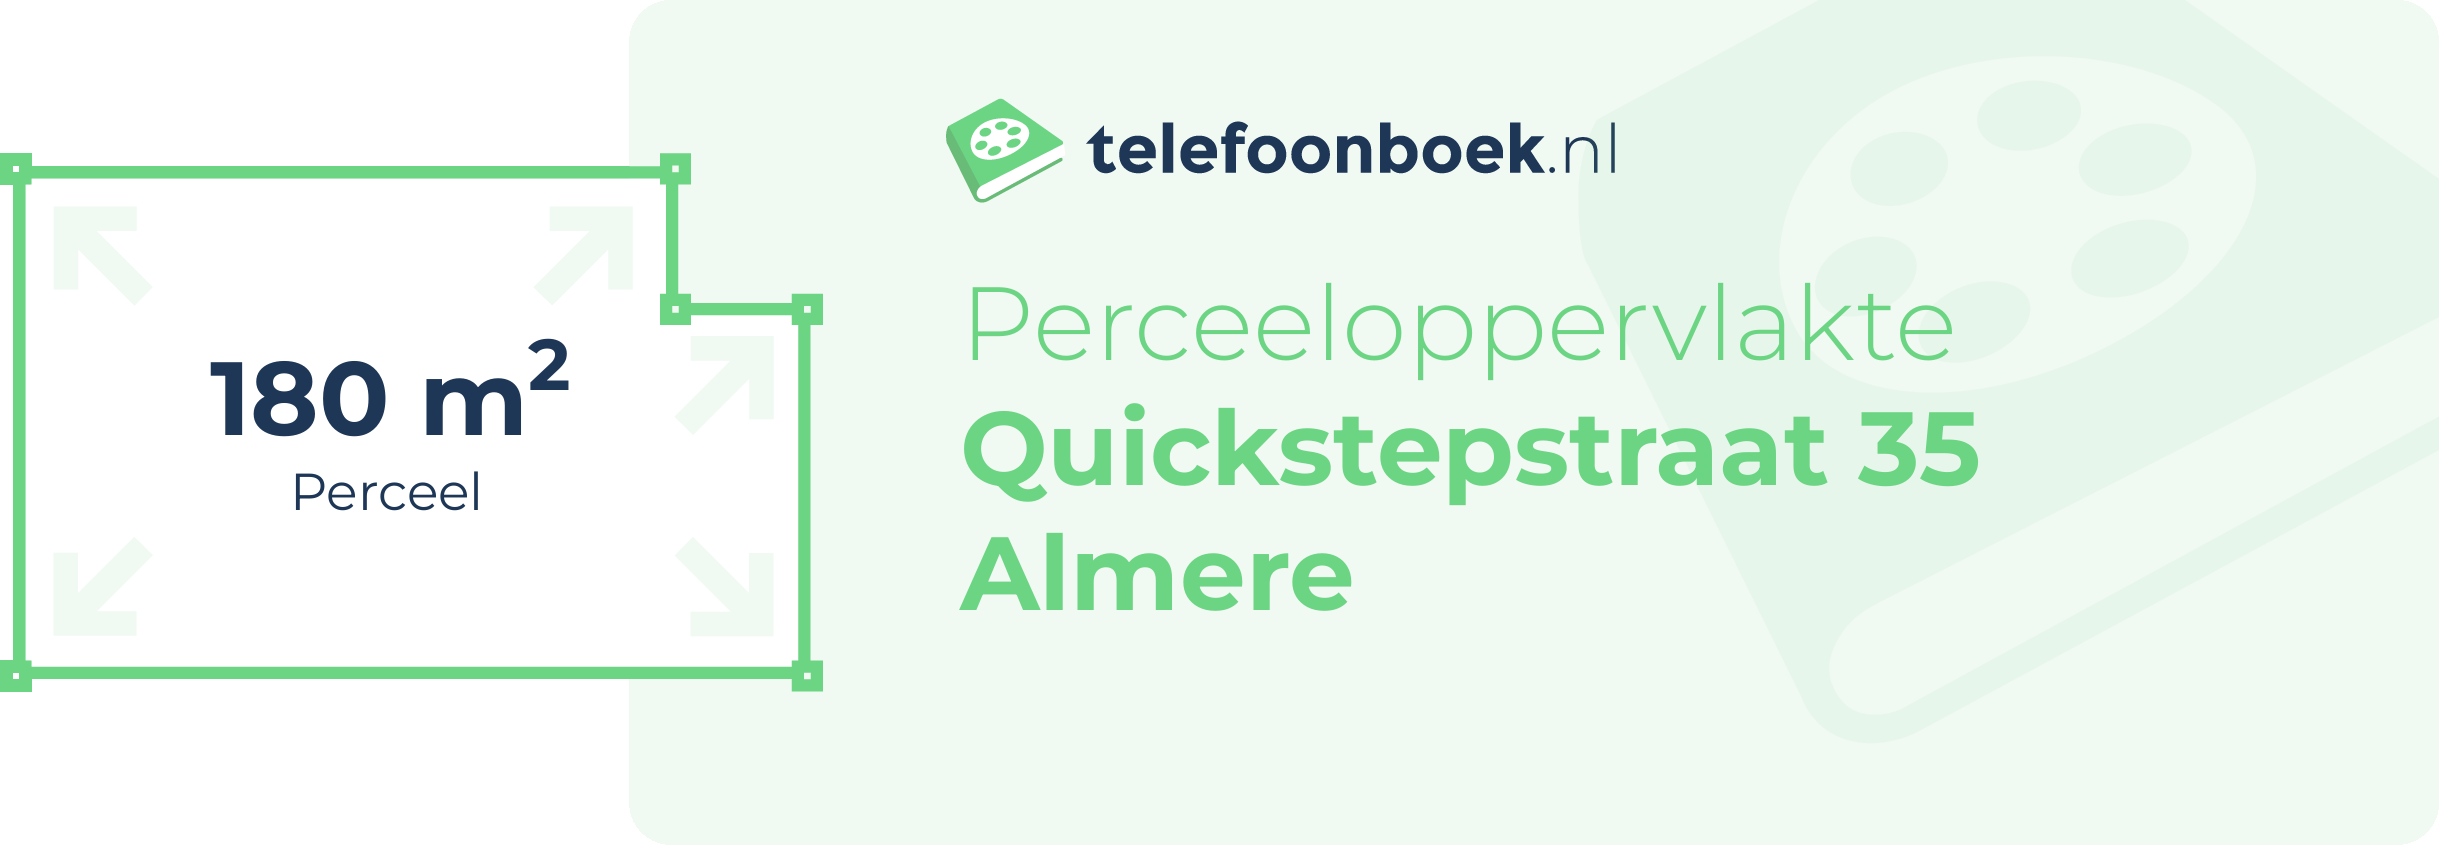 Perceeloppervlakte Quickstepstraat 35 Almere